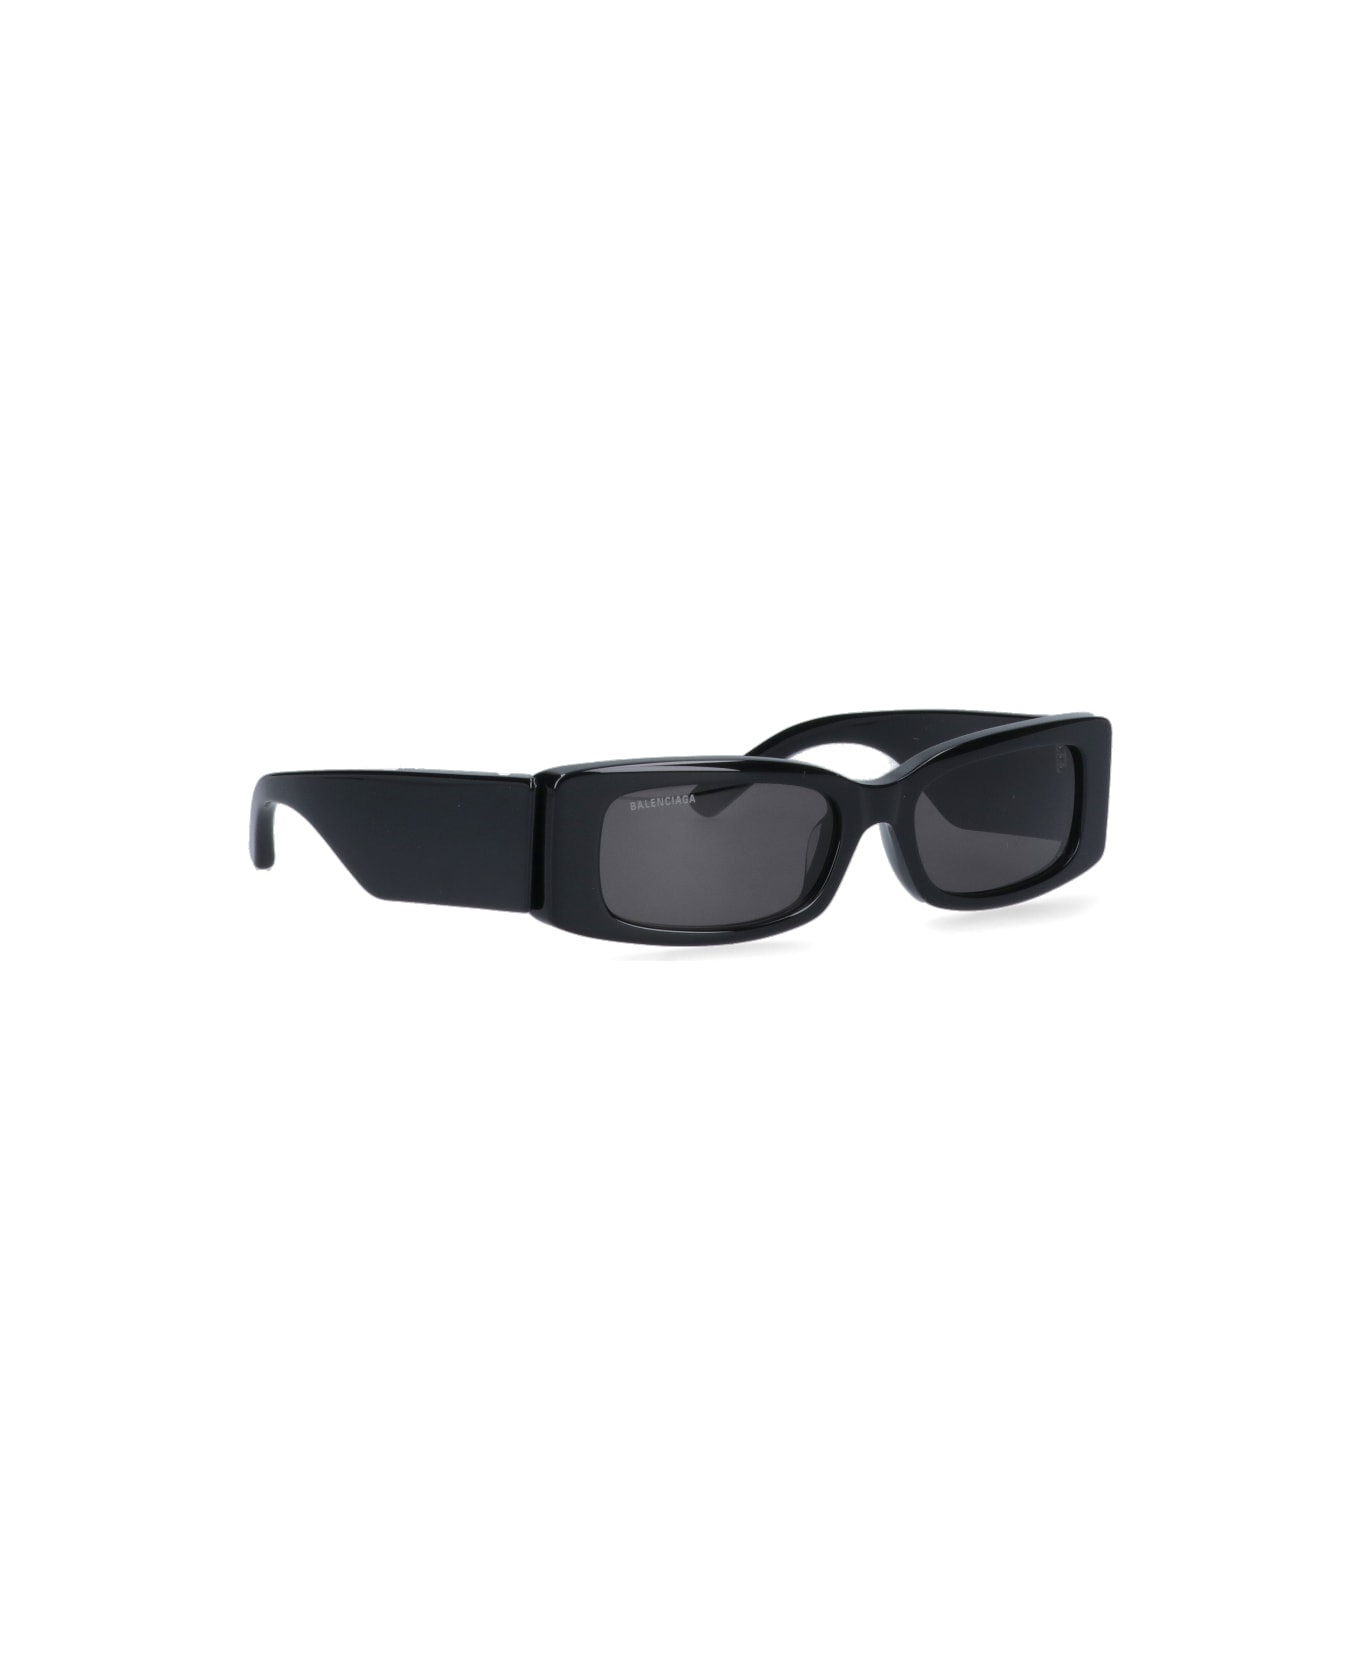 Balenciaga Eyewear Max Rectangle Sunglasses - Black